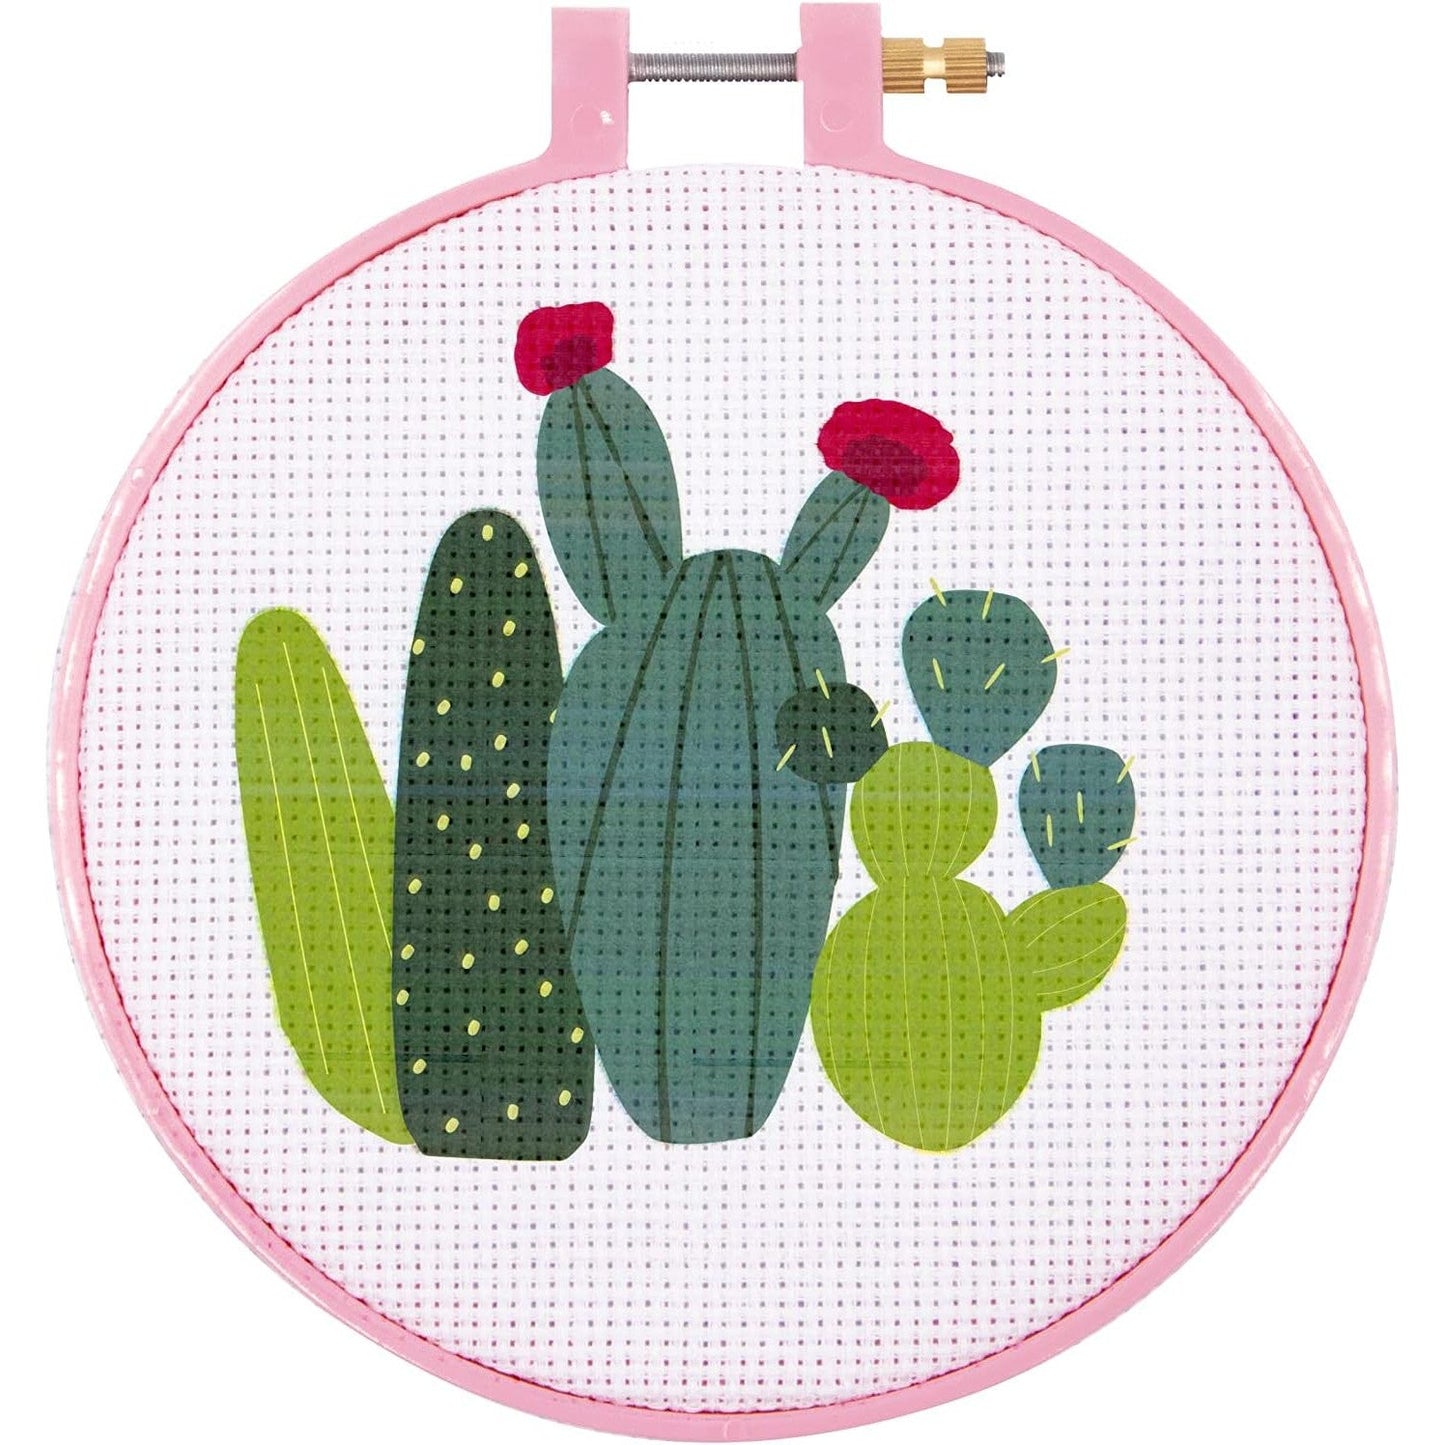 Cactus Crosstitch Kit | Embroidery Crafts Tool Set